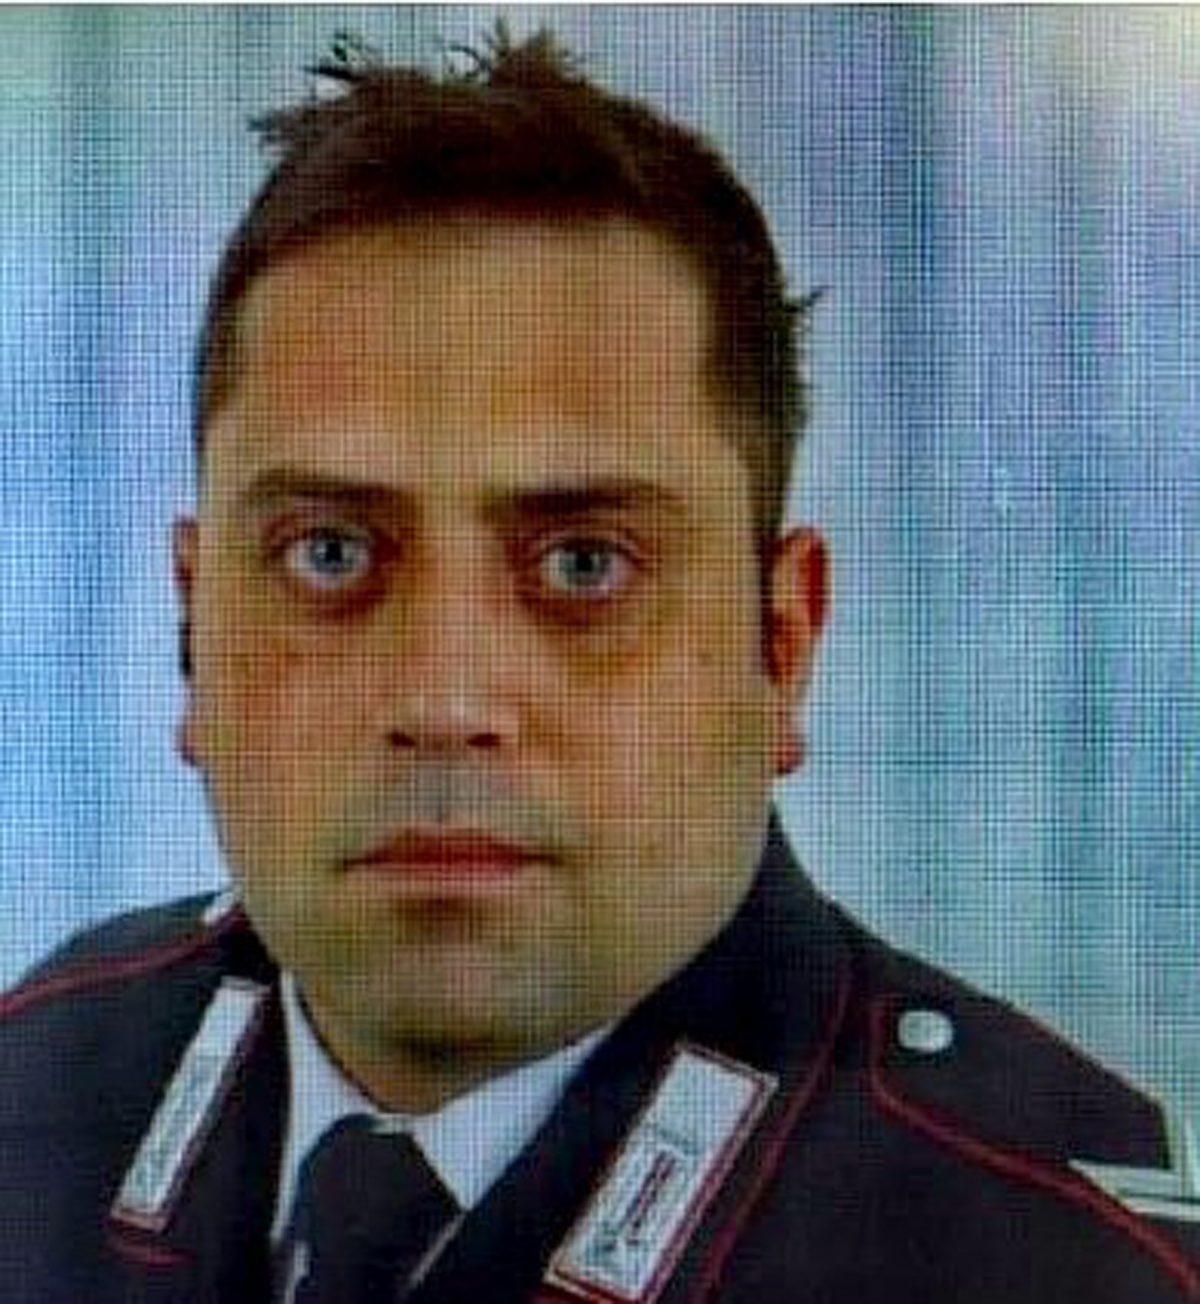 Police officer Mario Cerciello Rega, 35, who was stabbed to death in Rome, Italy, on July 26, 2019. (Italian Carabinieri via AP)